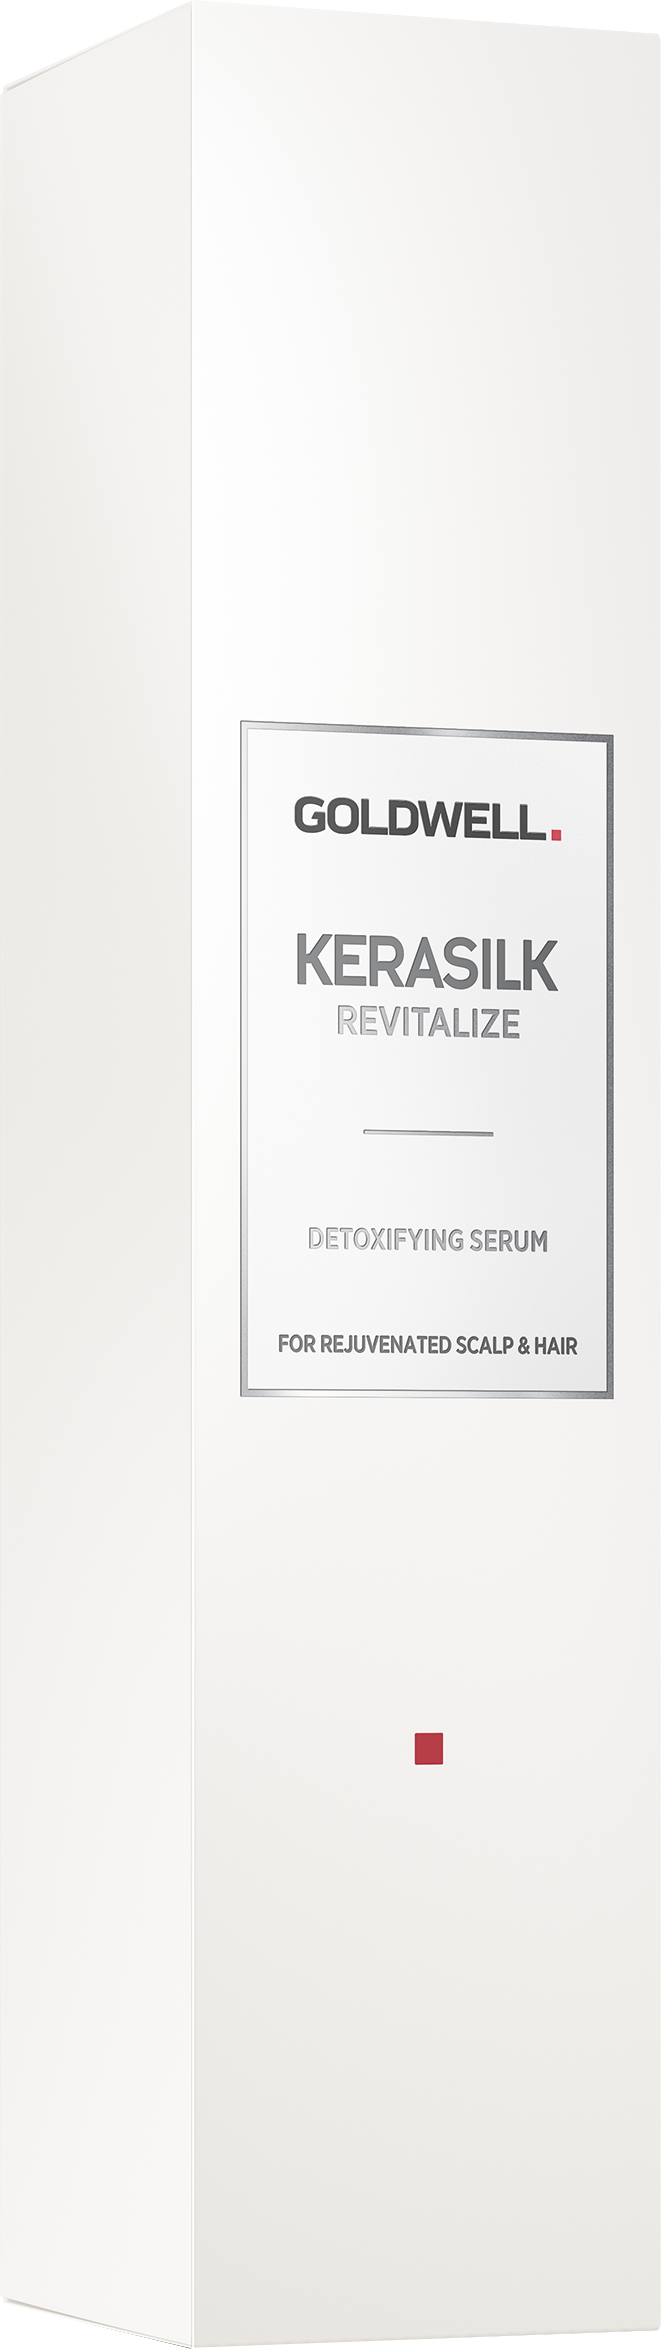 Goldwell-Kerasilk Revitalize Detoxifying Serum 100ml